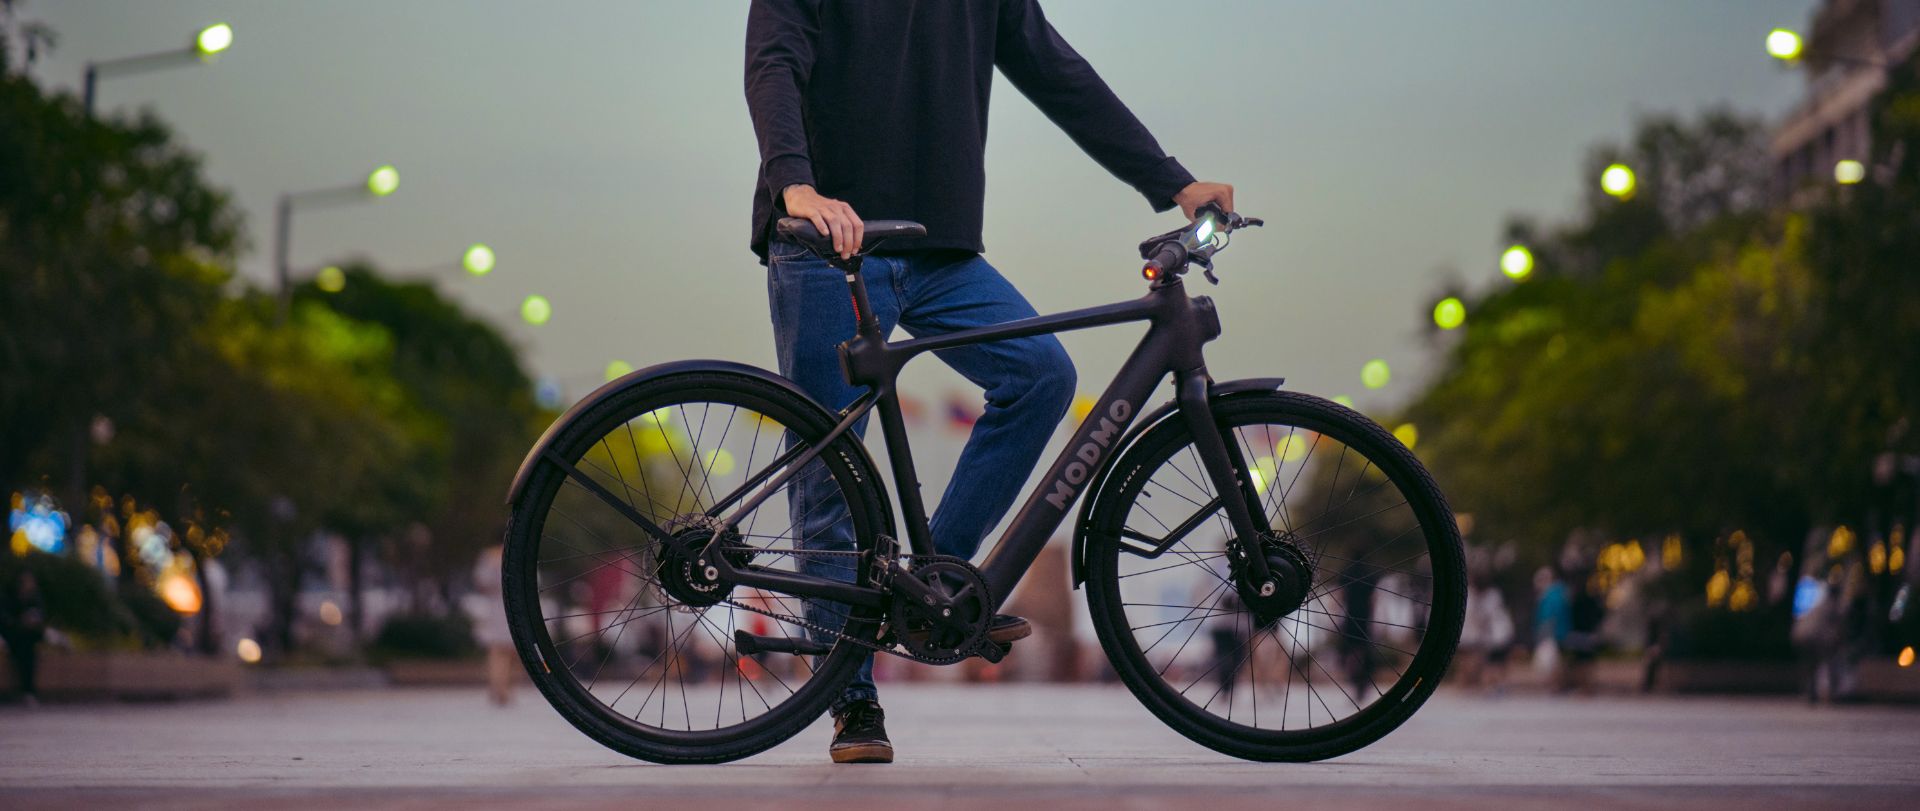 Modmo Saigon+ Electric Bicycle - RRP £2800 - Size M (Rider: 155-175cm) - Image 15 of 19